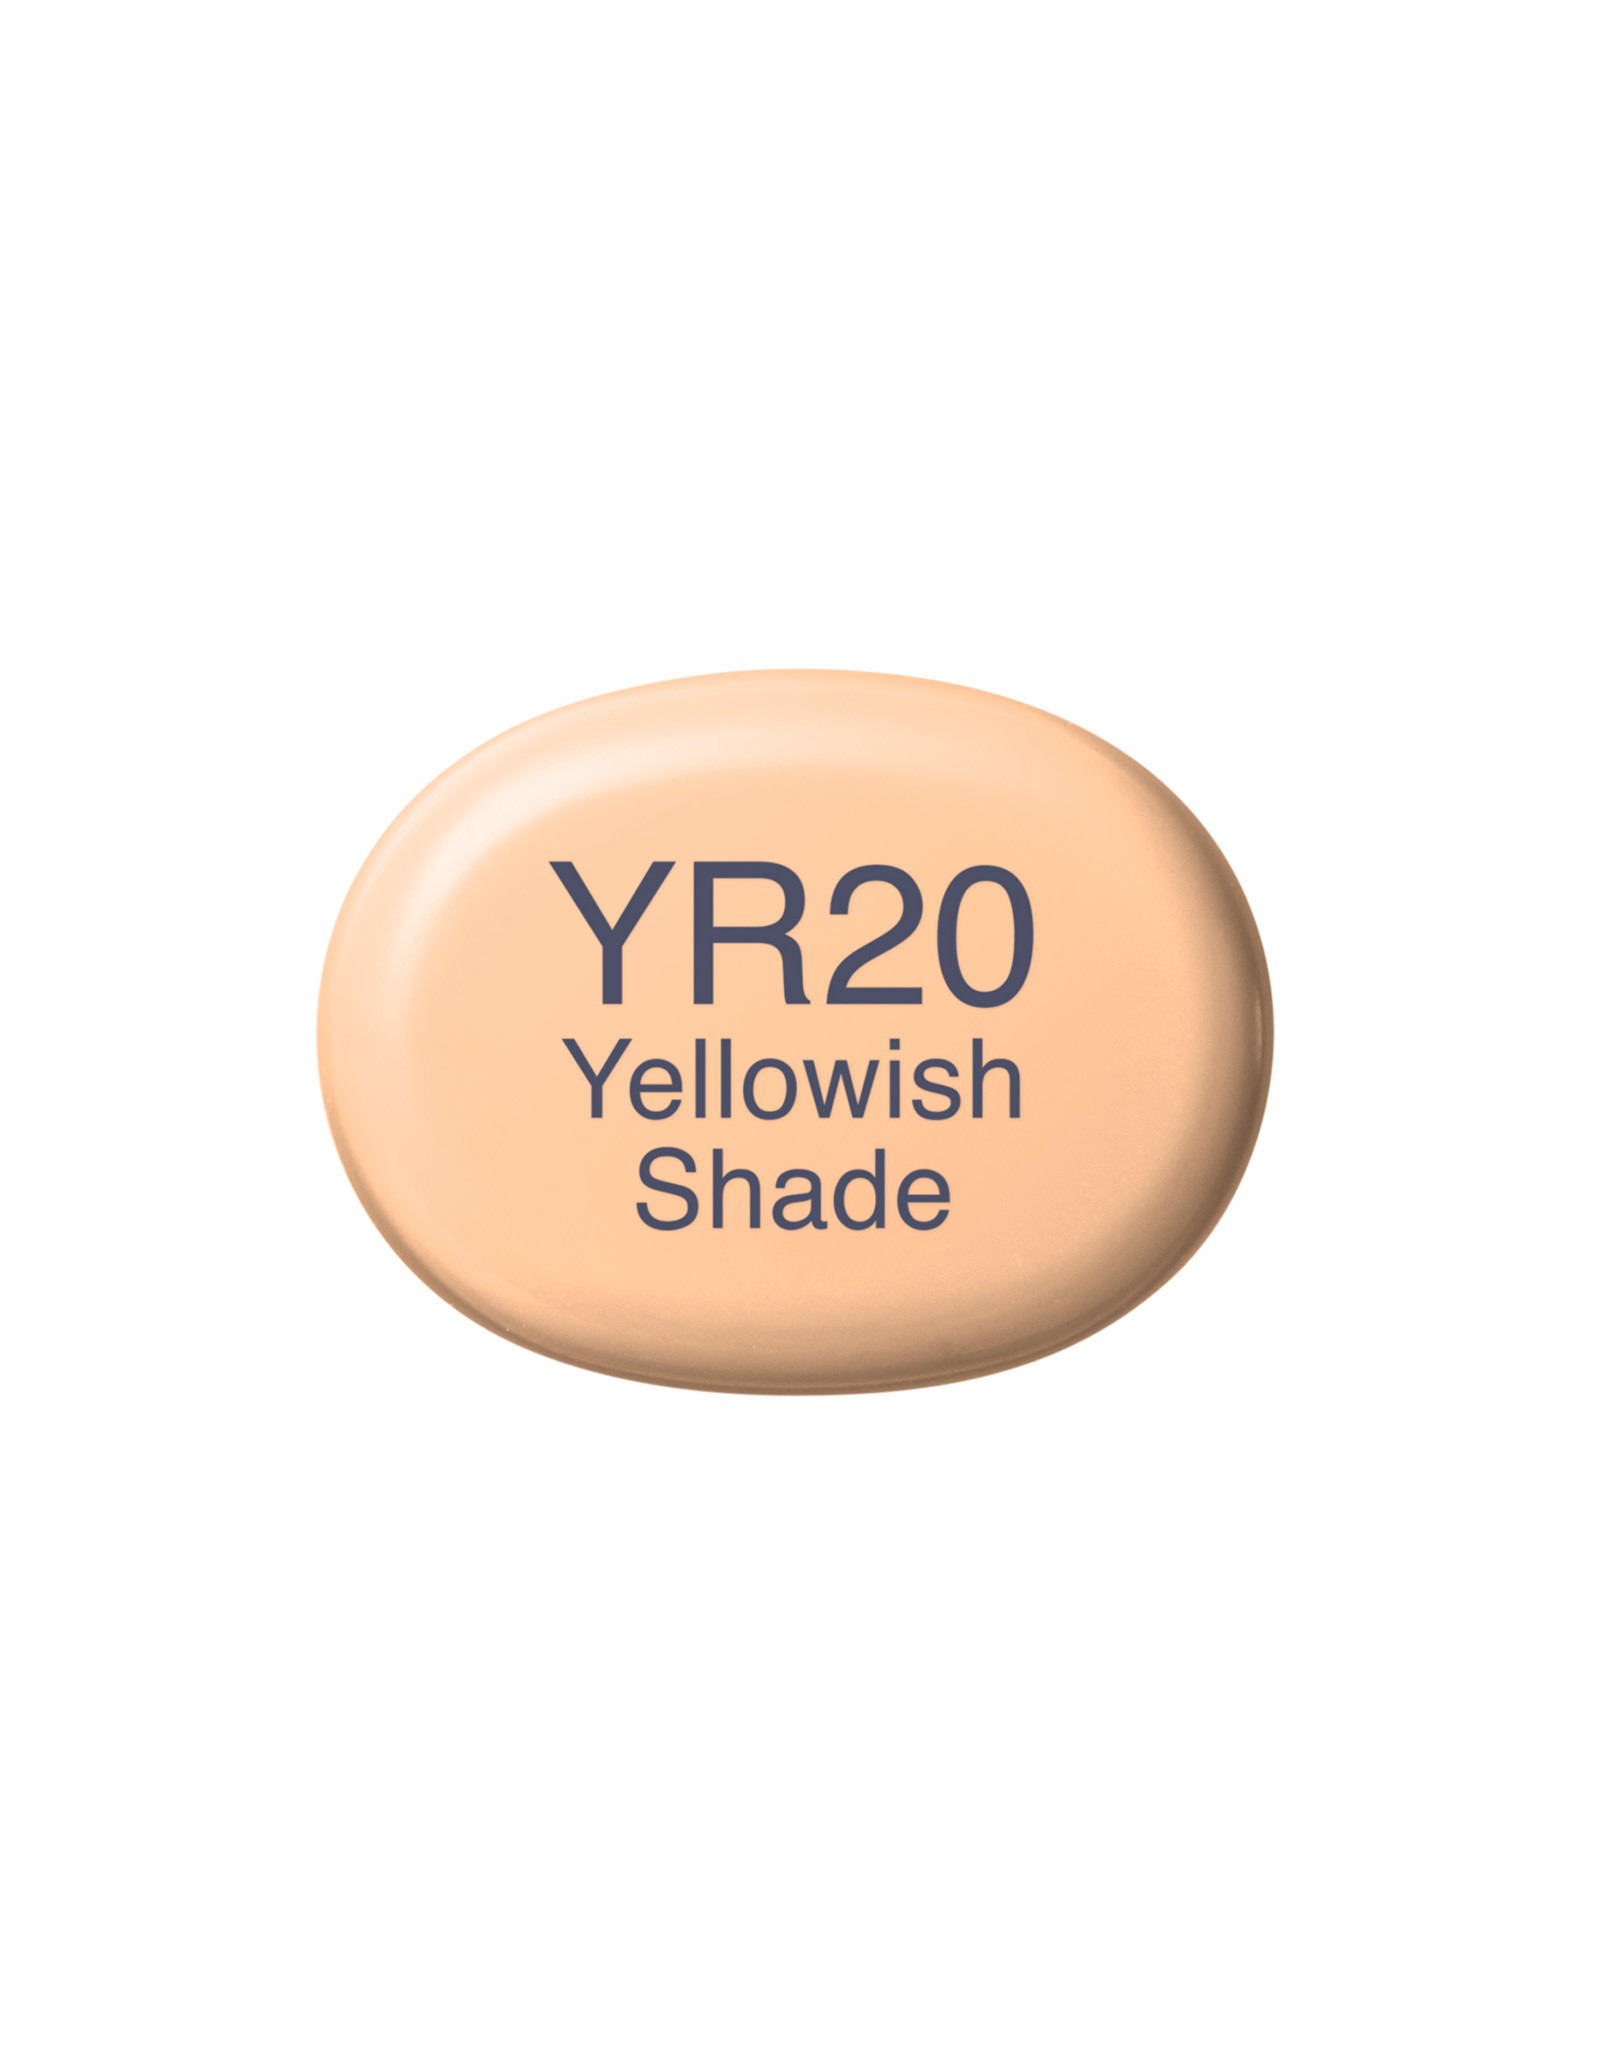 COPIC COPIC Sketch Marker YR20 Yellowish Shade